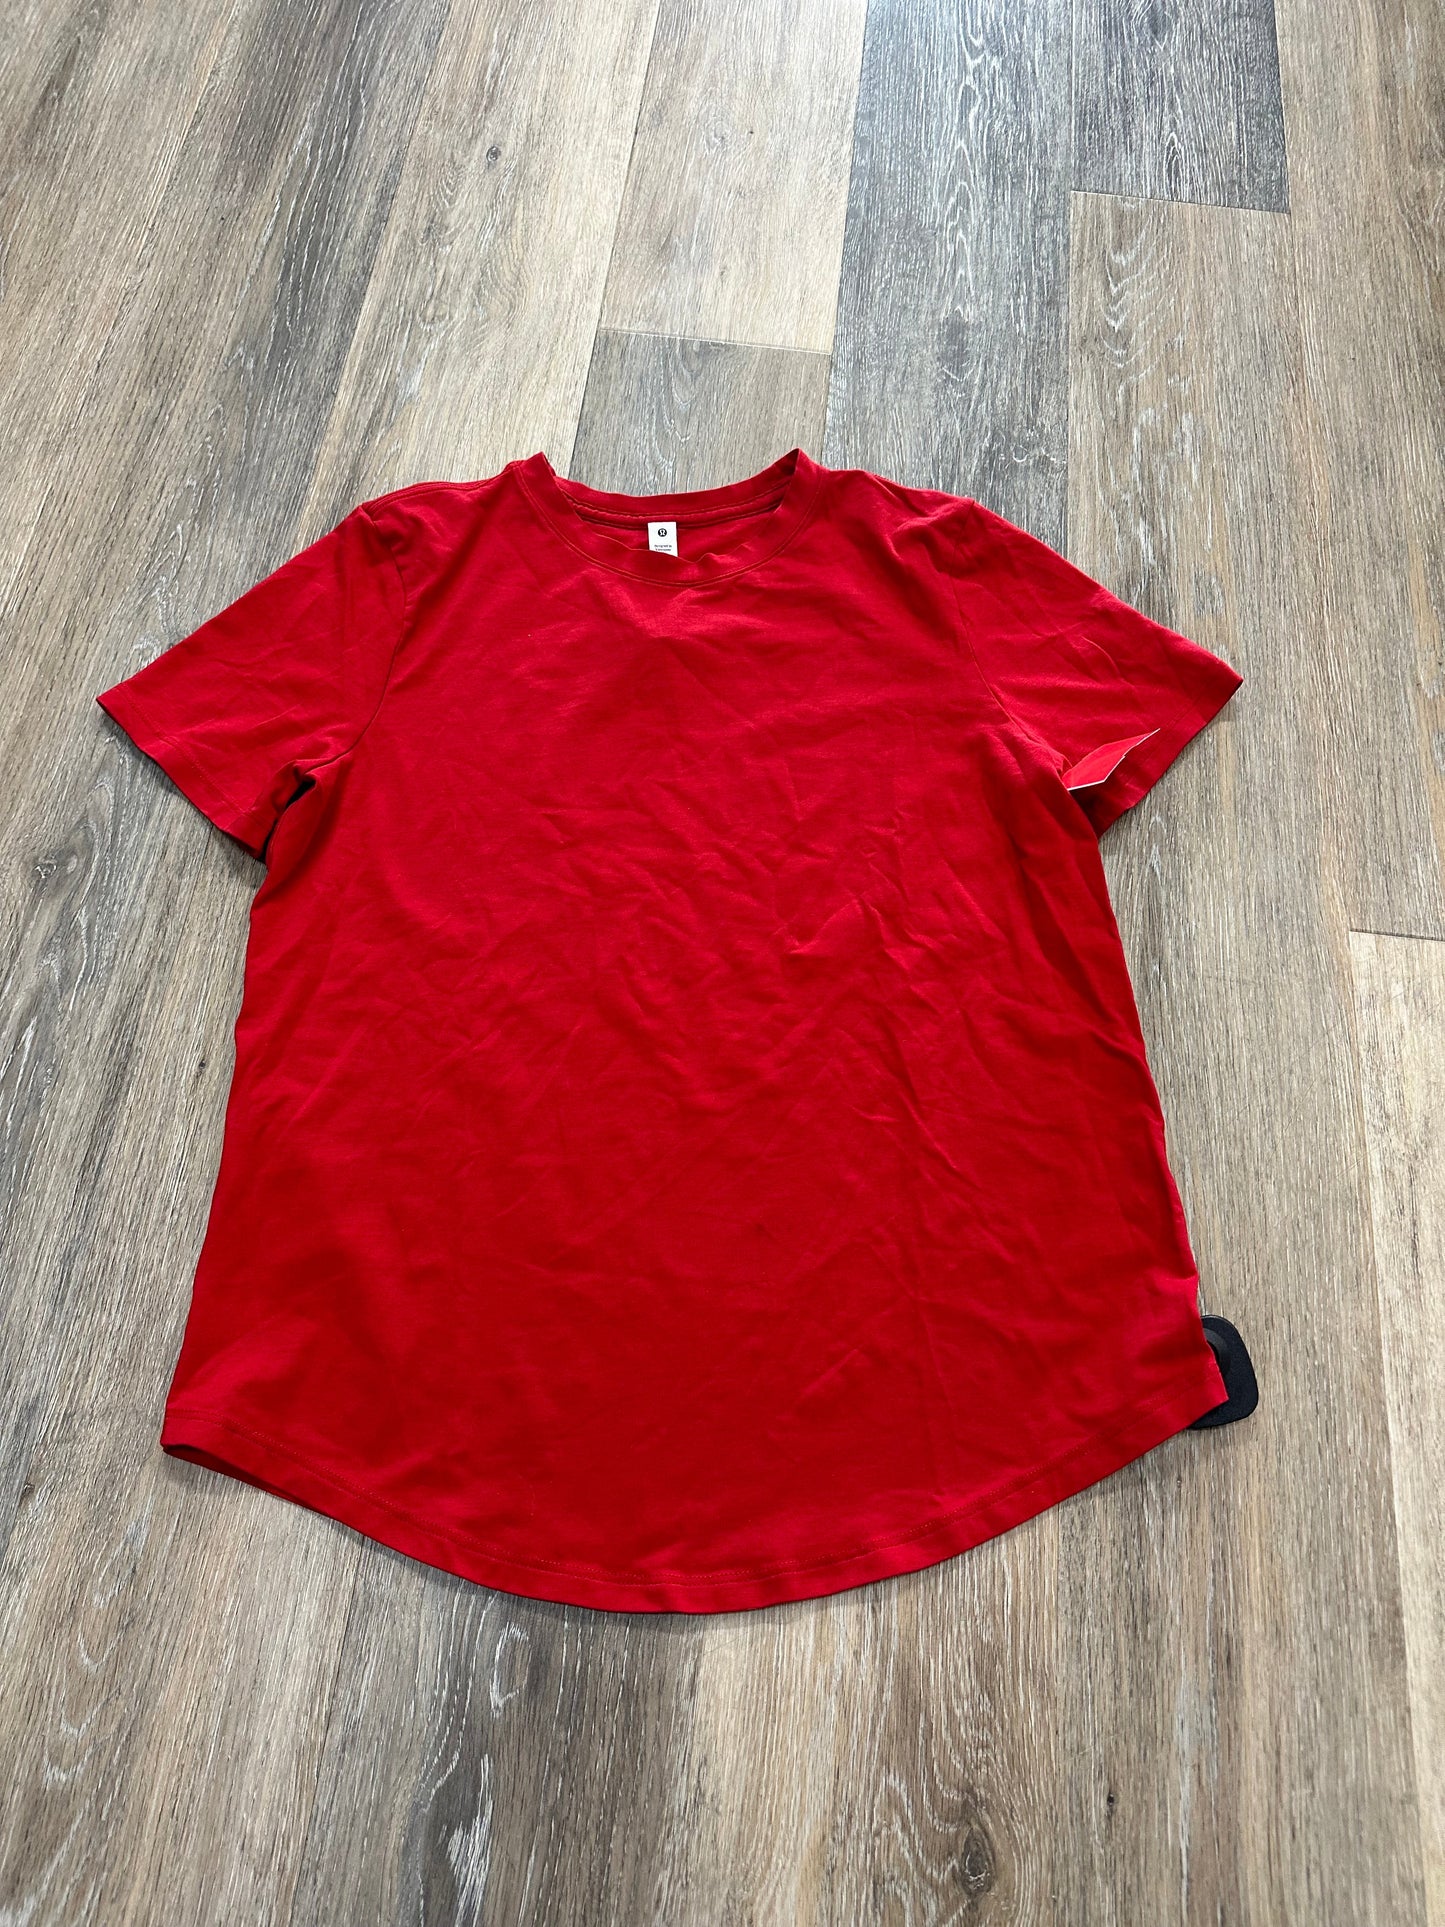 Red Athletic Top Short Sleeve Lululemon, Size 6